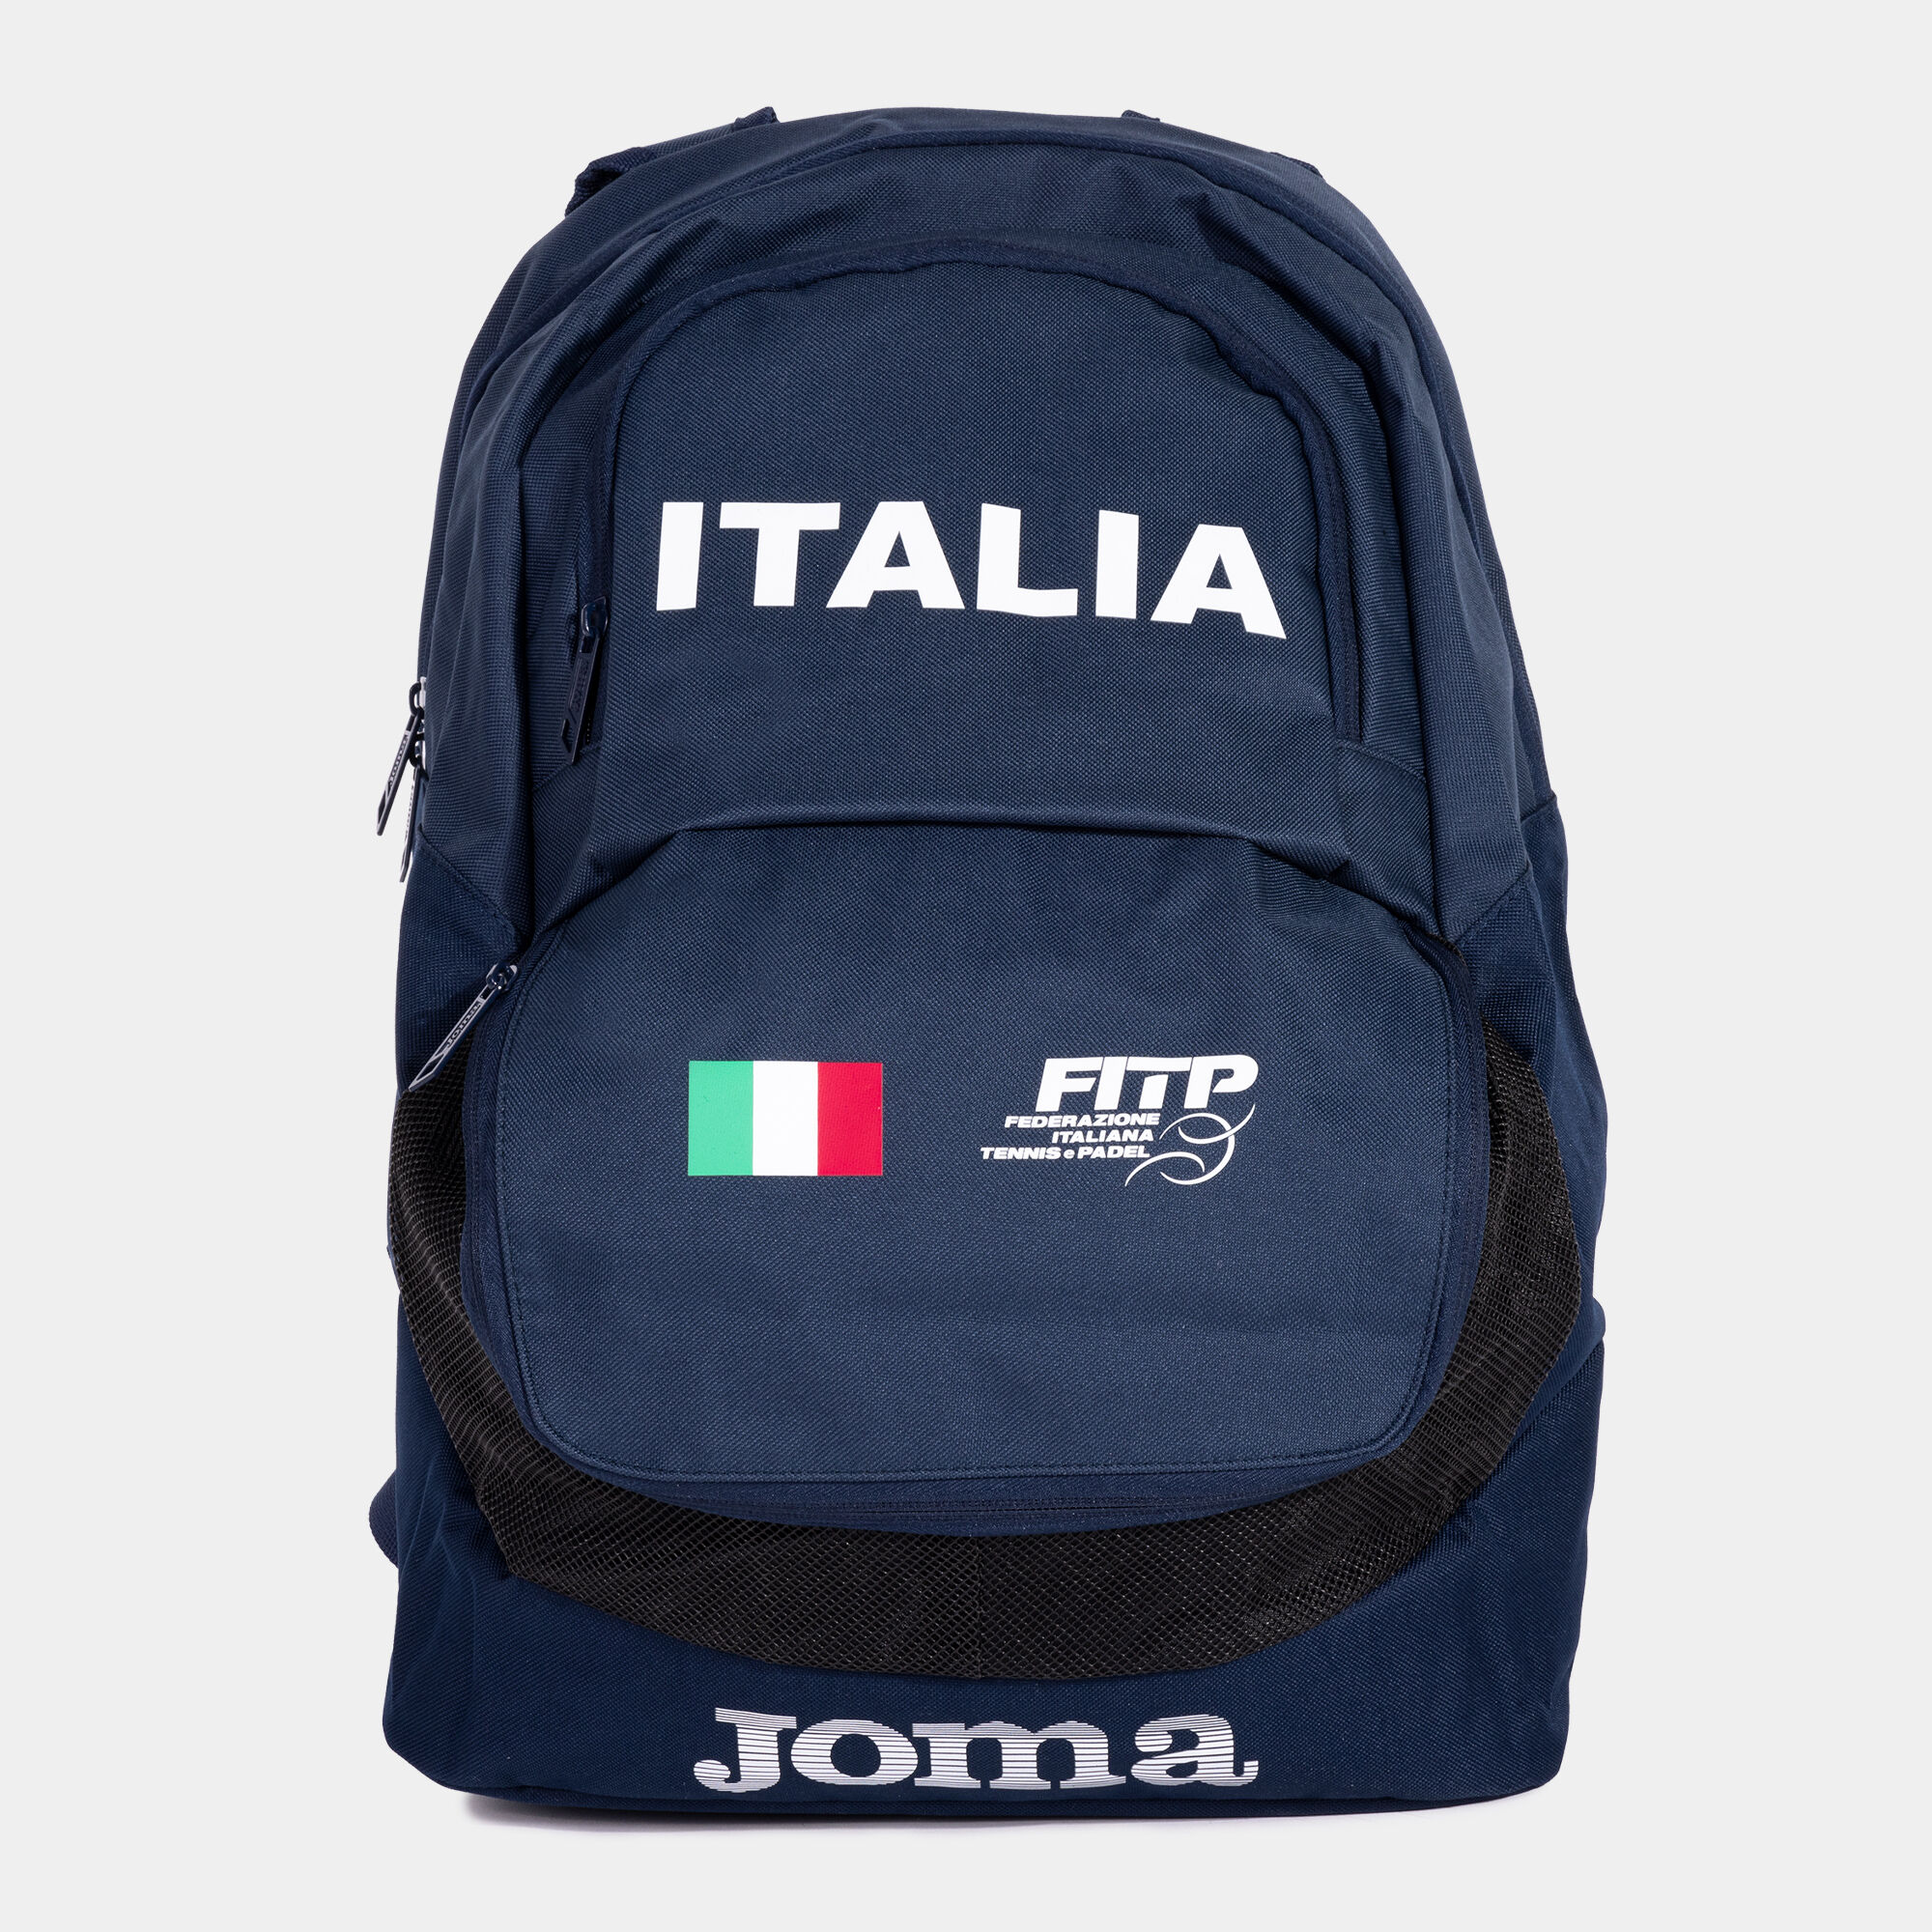 Backpack - shoe bag Italian Tennis And Padel Federation 23/24